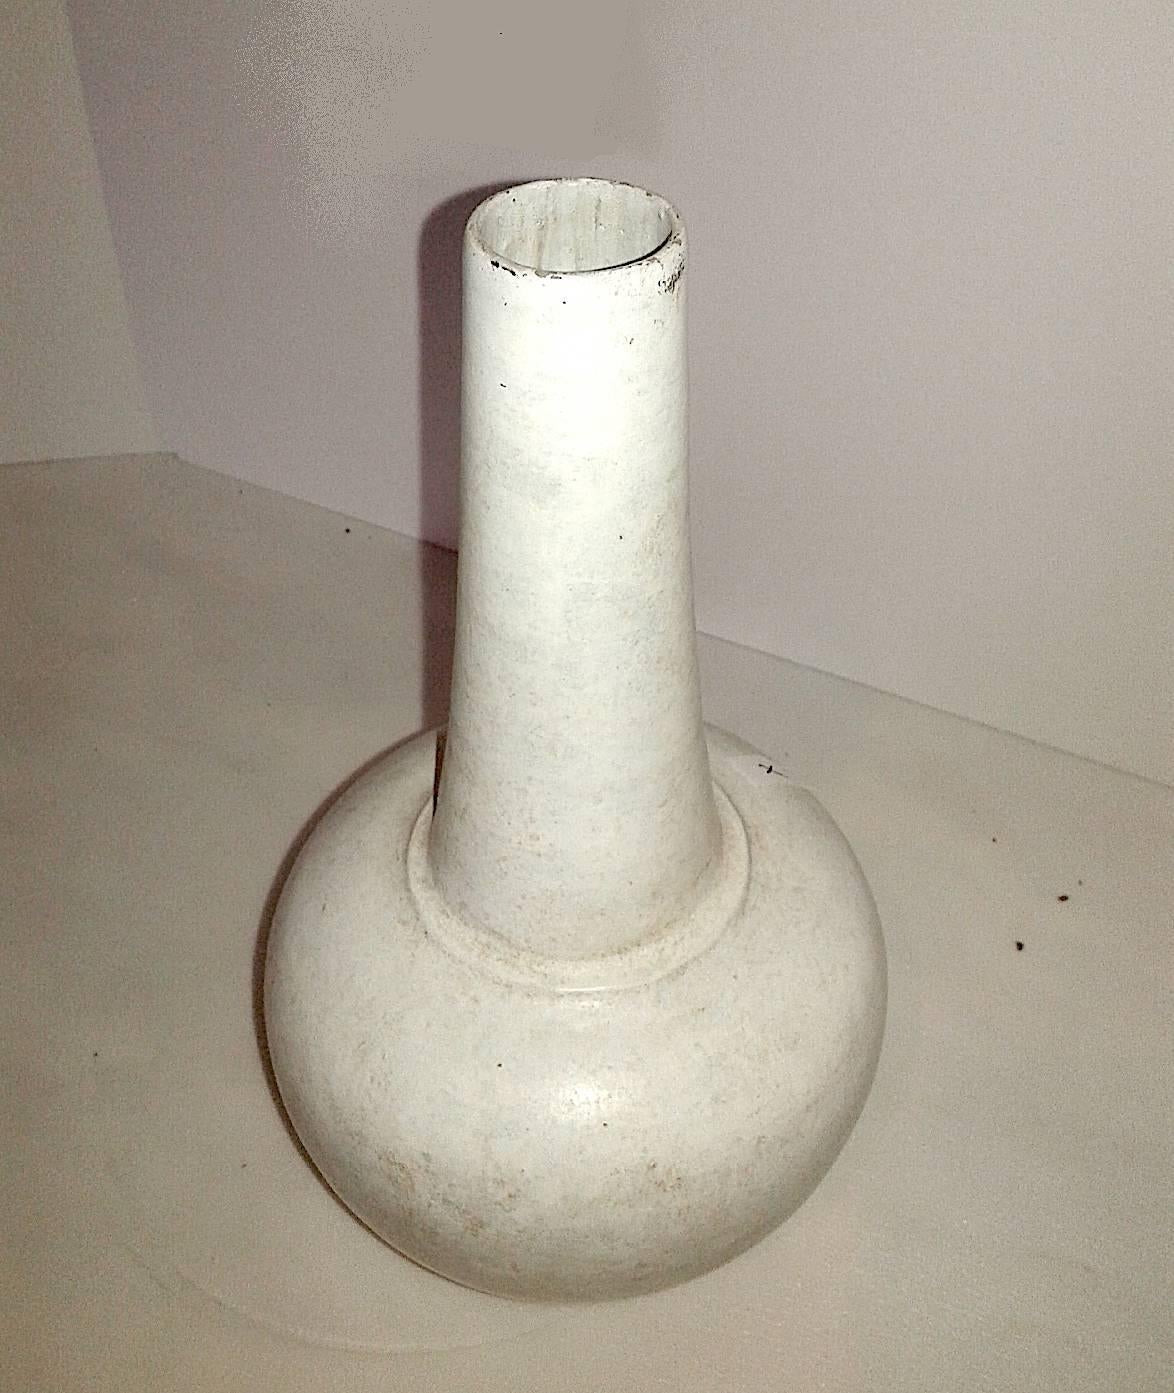 Thai Ceramic Vase with White Glaze and Long Neck